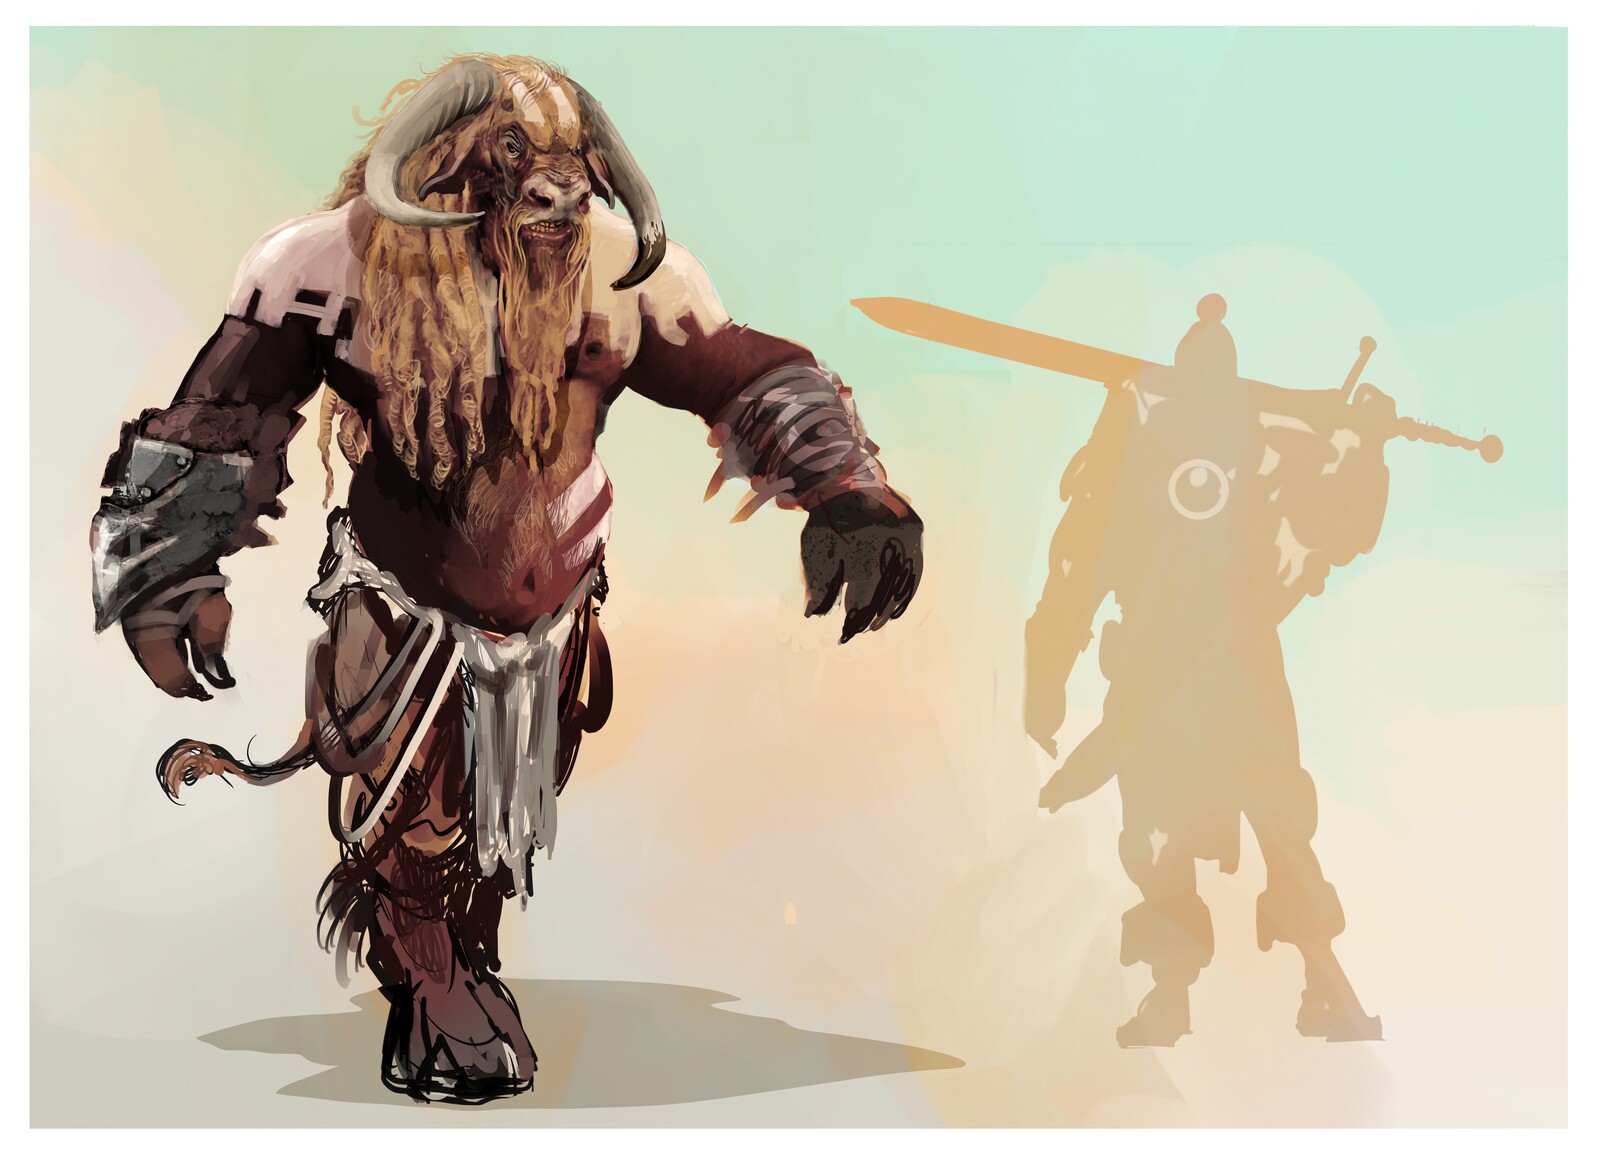 Huge Minotaur-folk, powerful warriors.